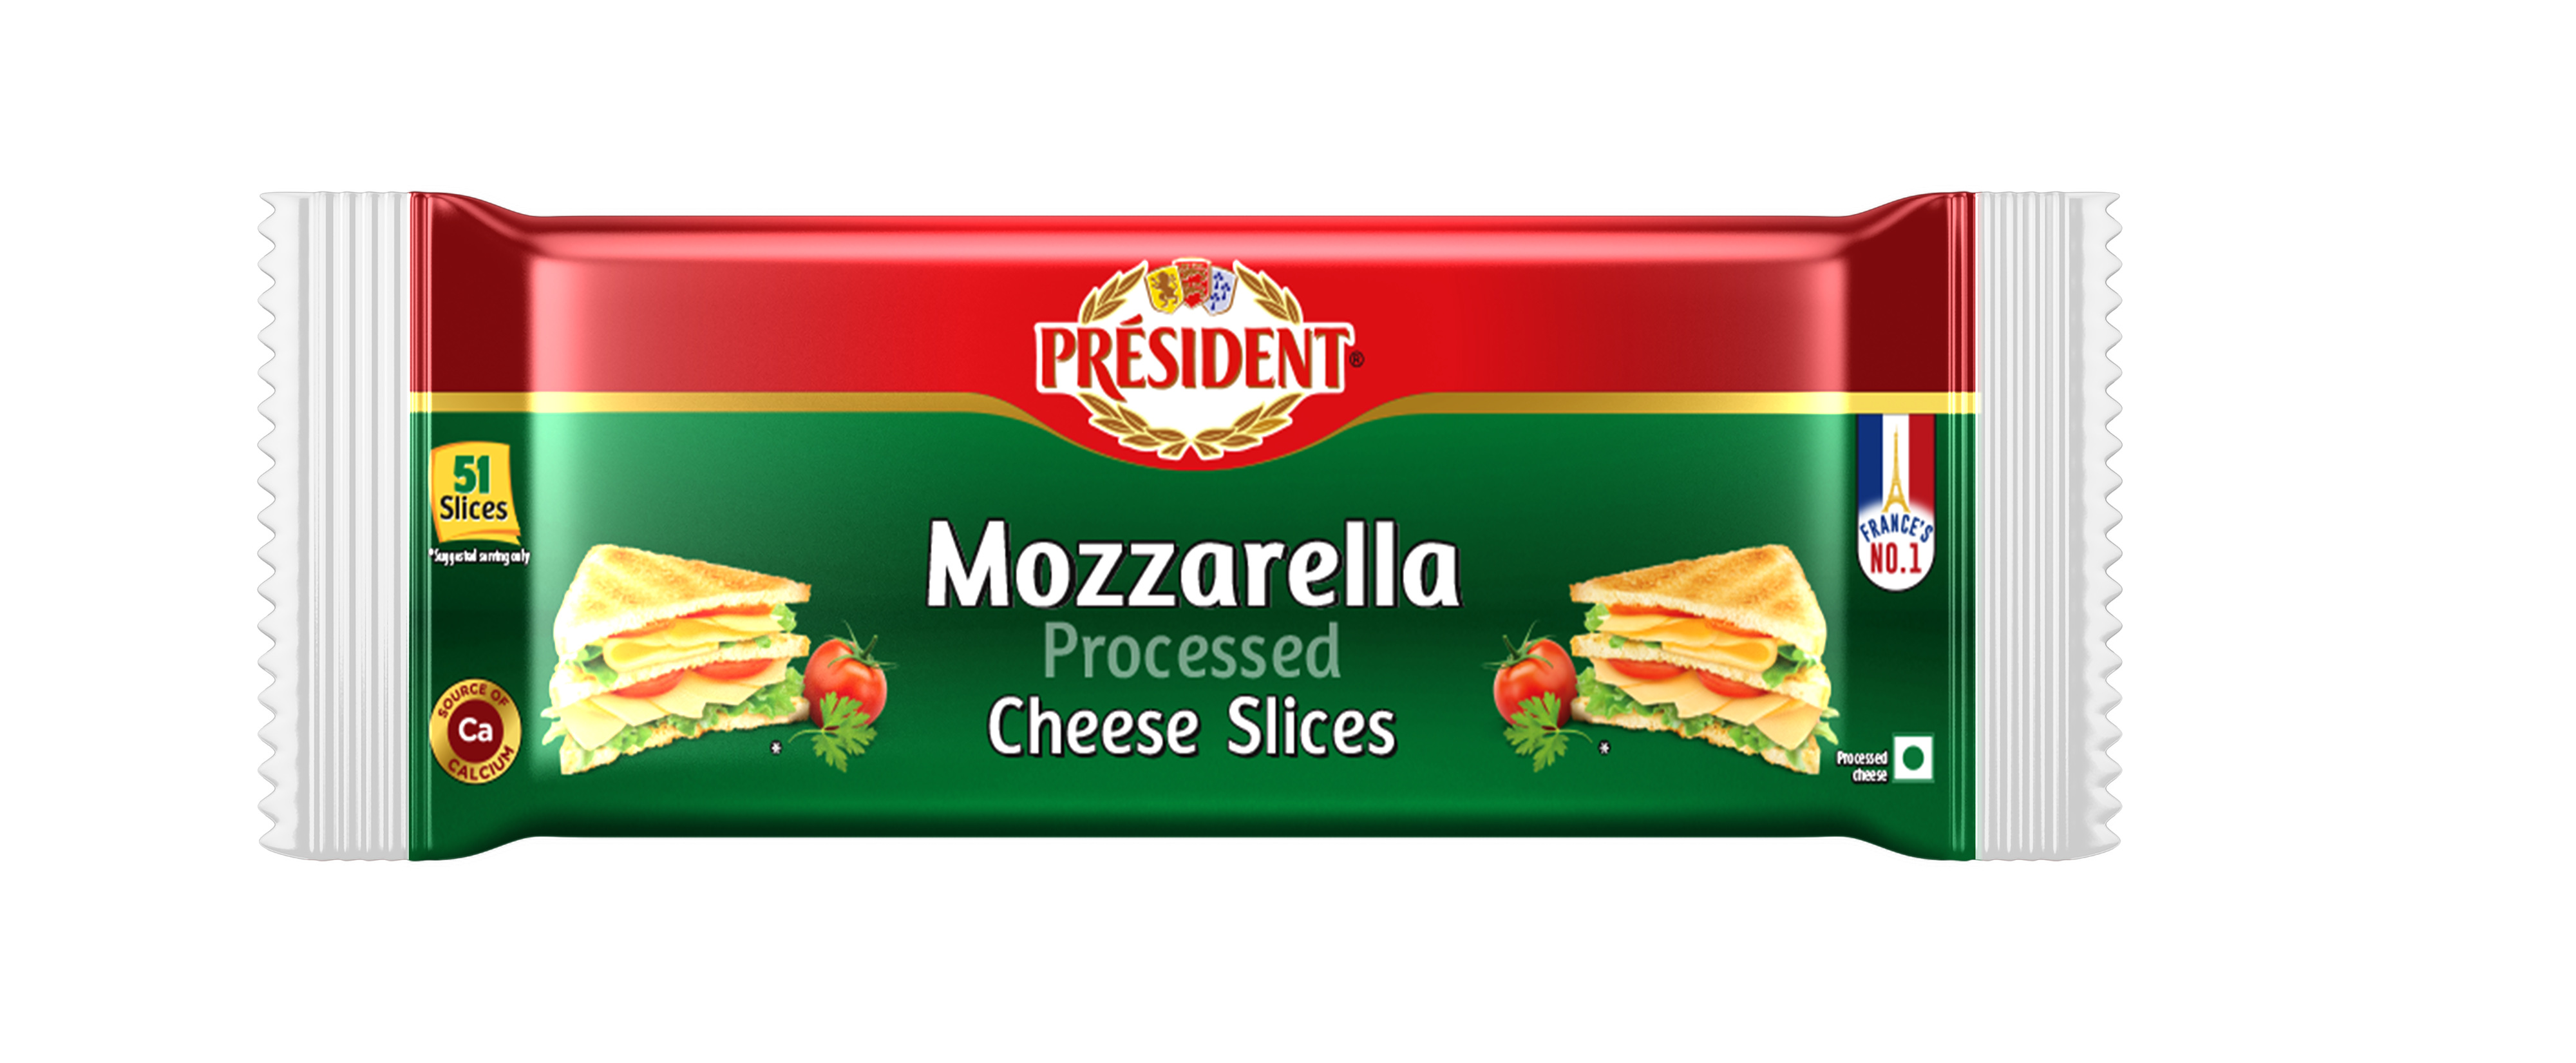 Président ® Mozzarella Processed Cheese Slices